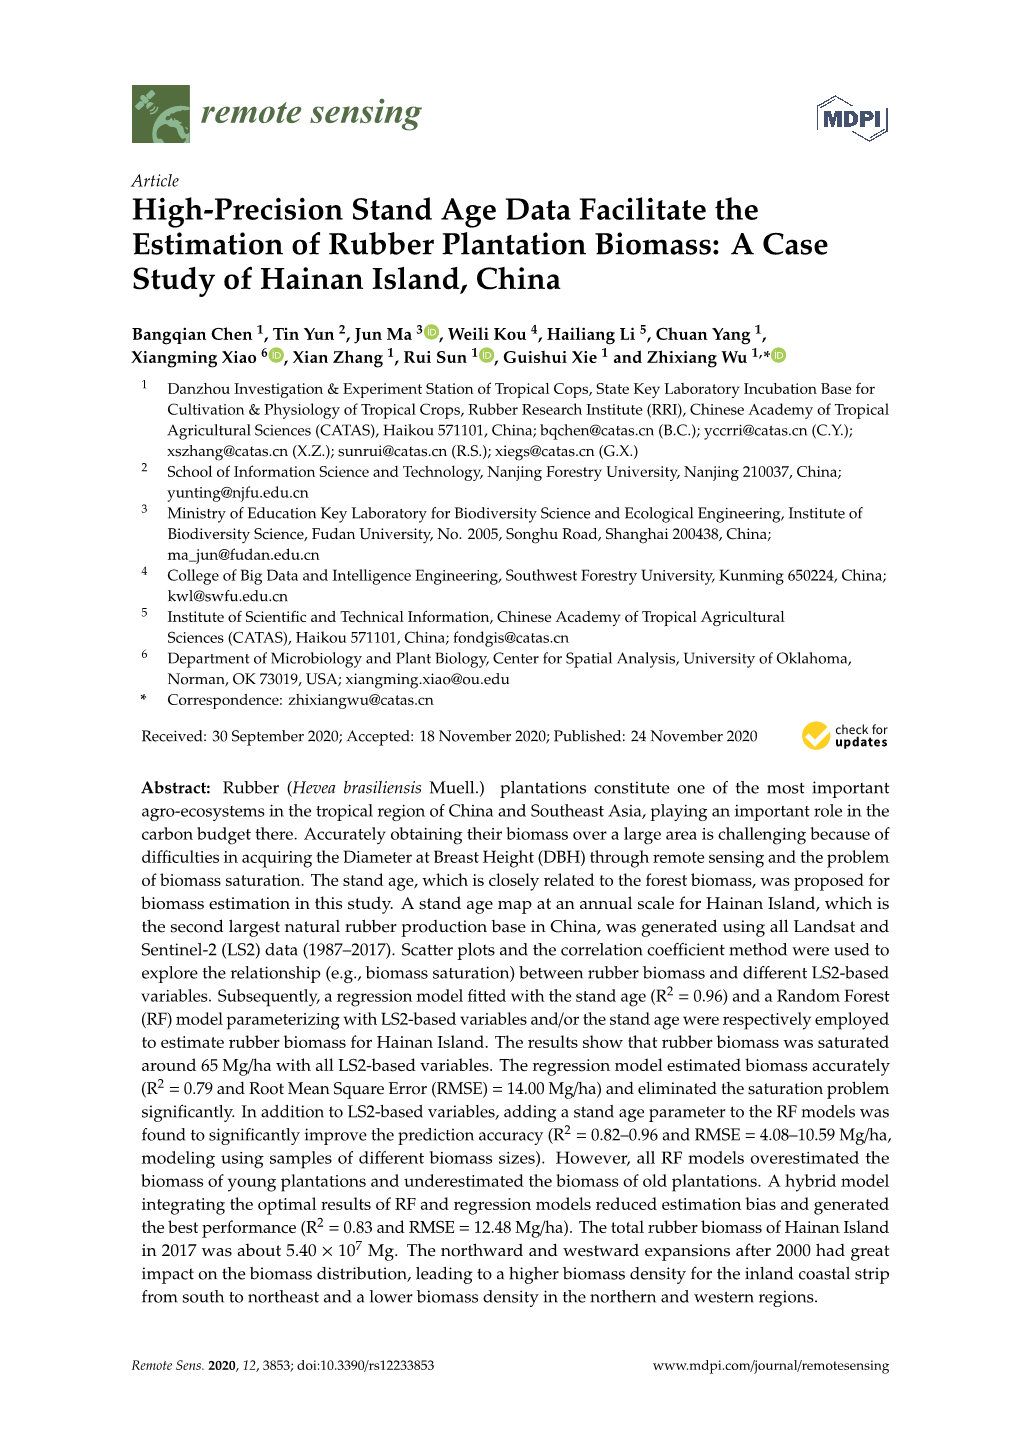 High-Precision Stand Age Data Facilitate the Estimation of Rubber Plantation Biomass: a Case Study of Hainan Island, China